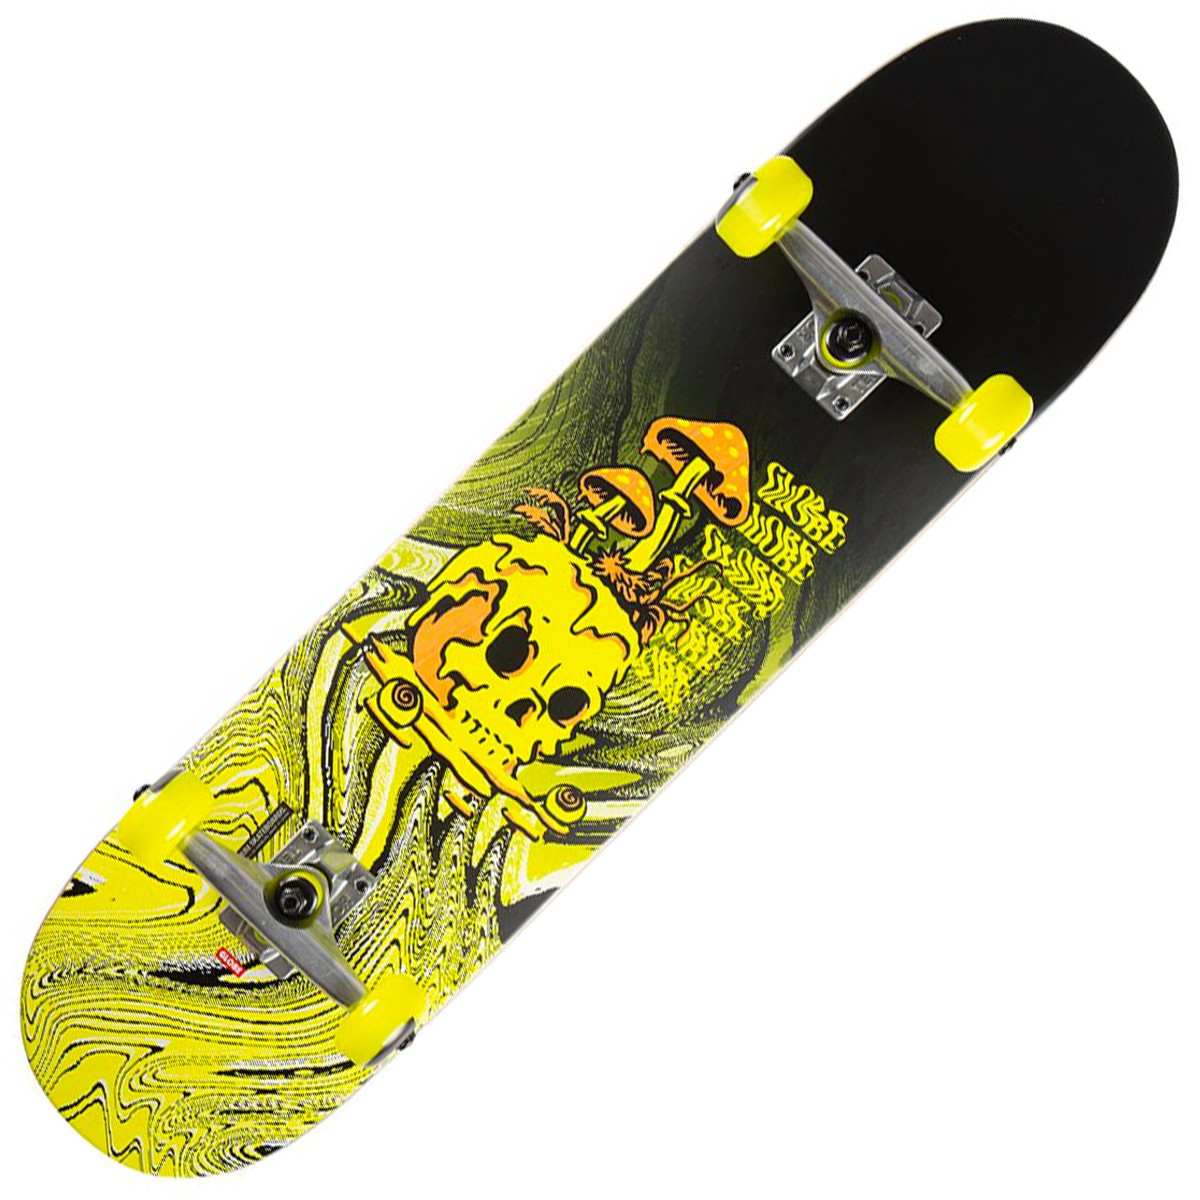 Sinis 9:45 sense GLOBE “G1 Nature Walk” Black/Toxic Yellow Pre-built complete skateboard